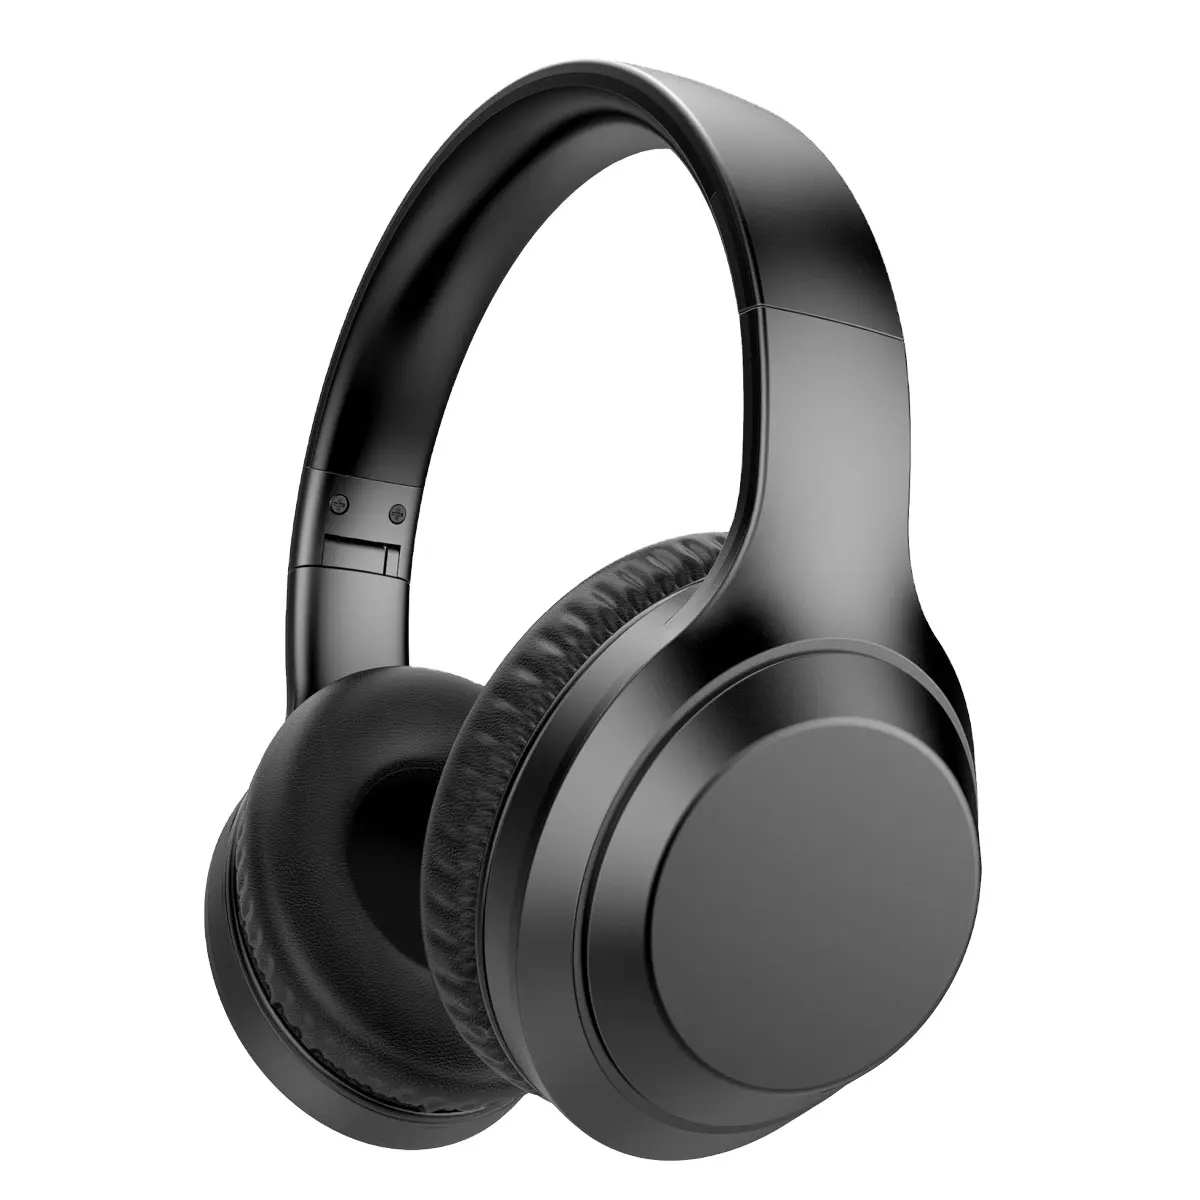 New Earphones Headphones Headsets Noise Cancelling Wireless Headphones with Mic